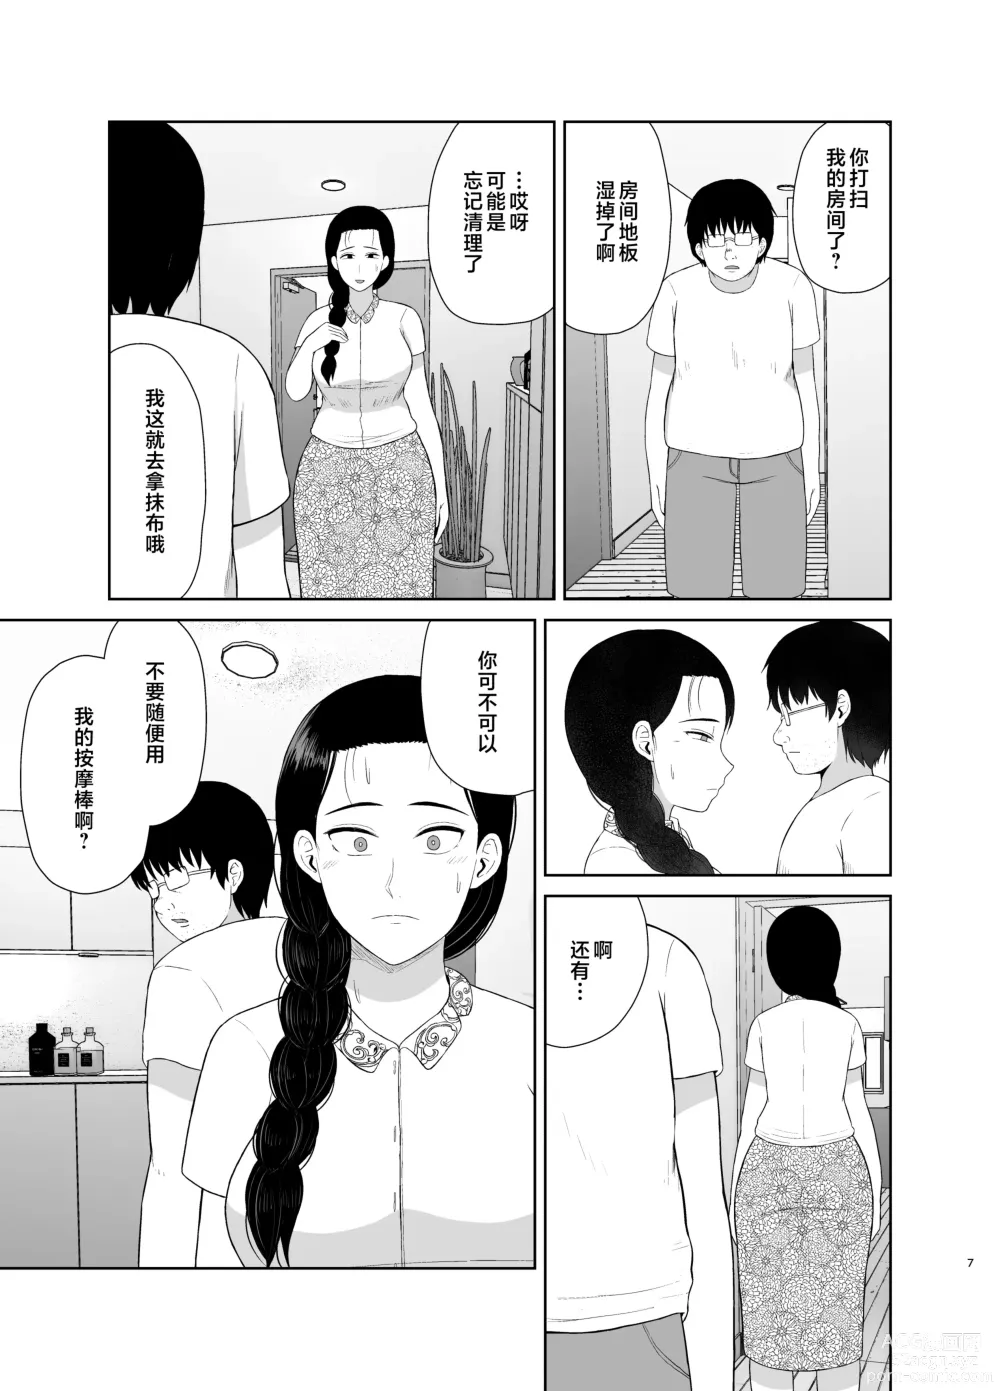 Page 7 of doujinshi Haha wa Omocha 1-2